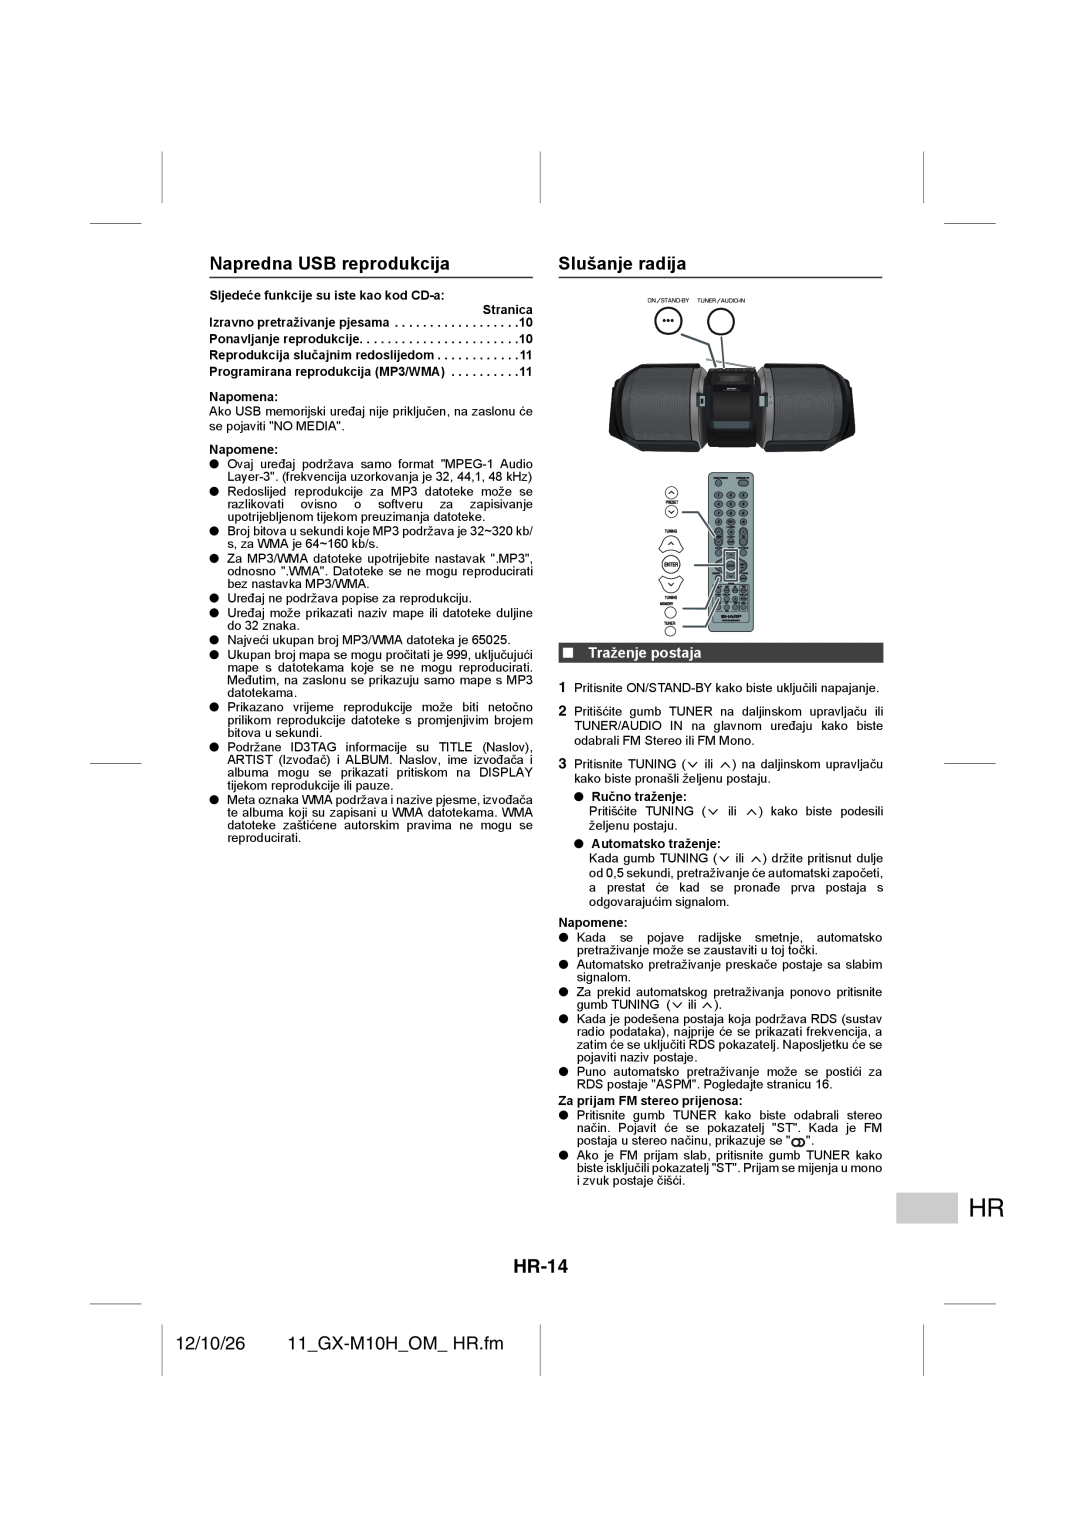 Sharp GX-M10H(RD) HR-14, Napredna USB reprodukcija, Slušanje radija, Traženje postaja, 12/10/26 11_GX-M10H_OM_HR.fm 